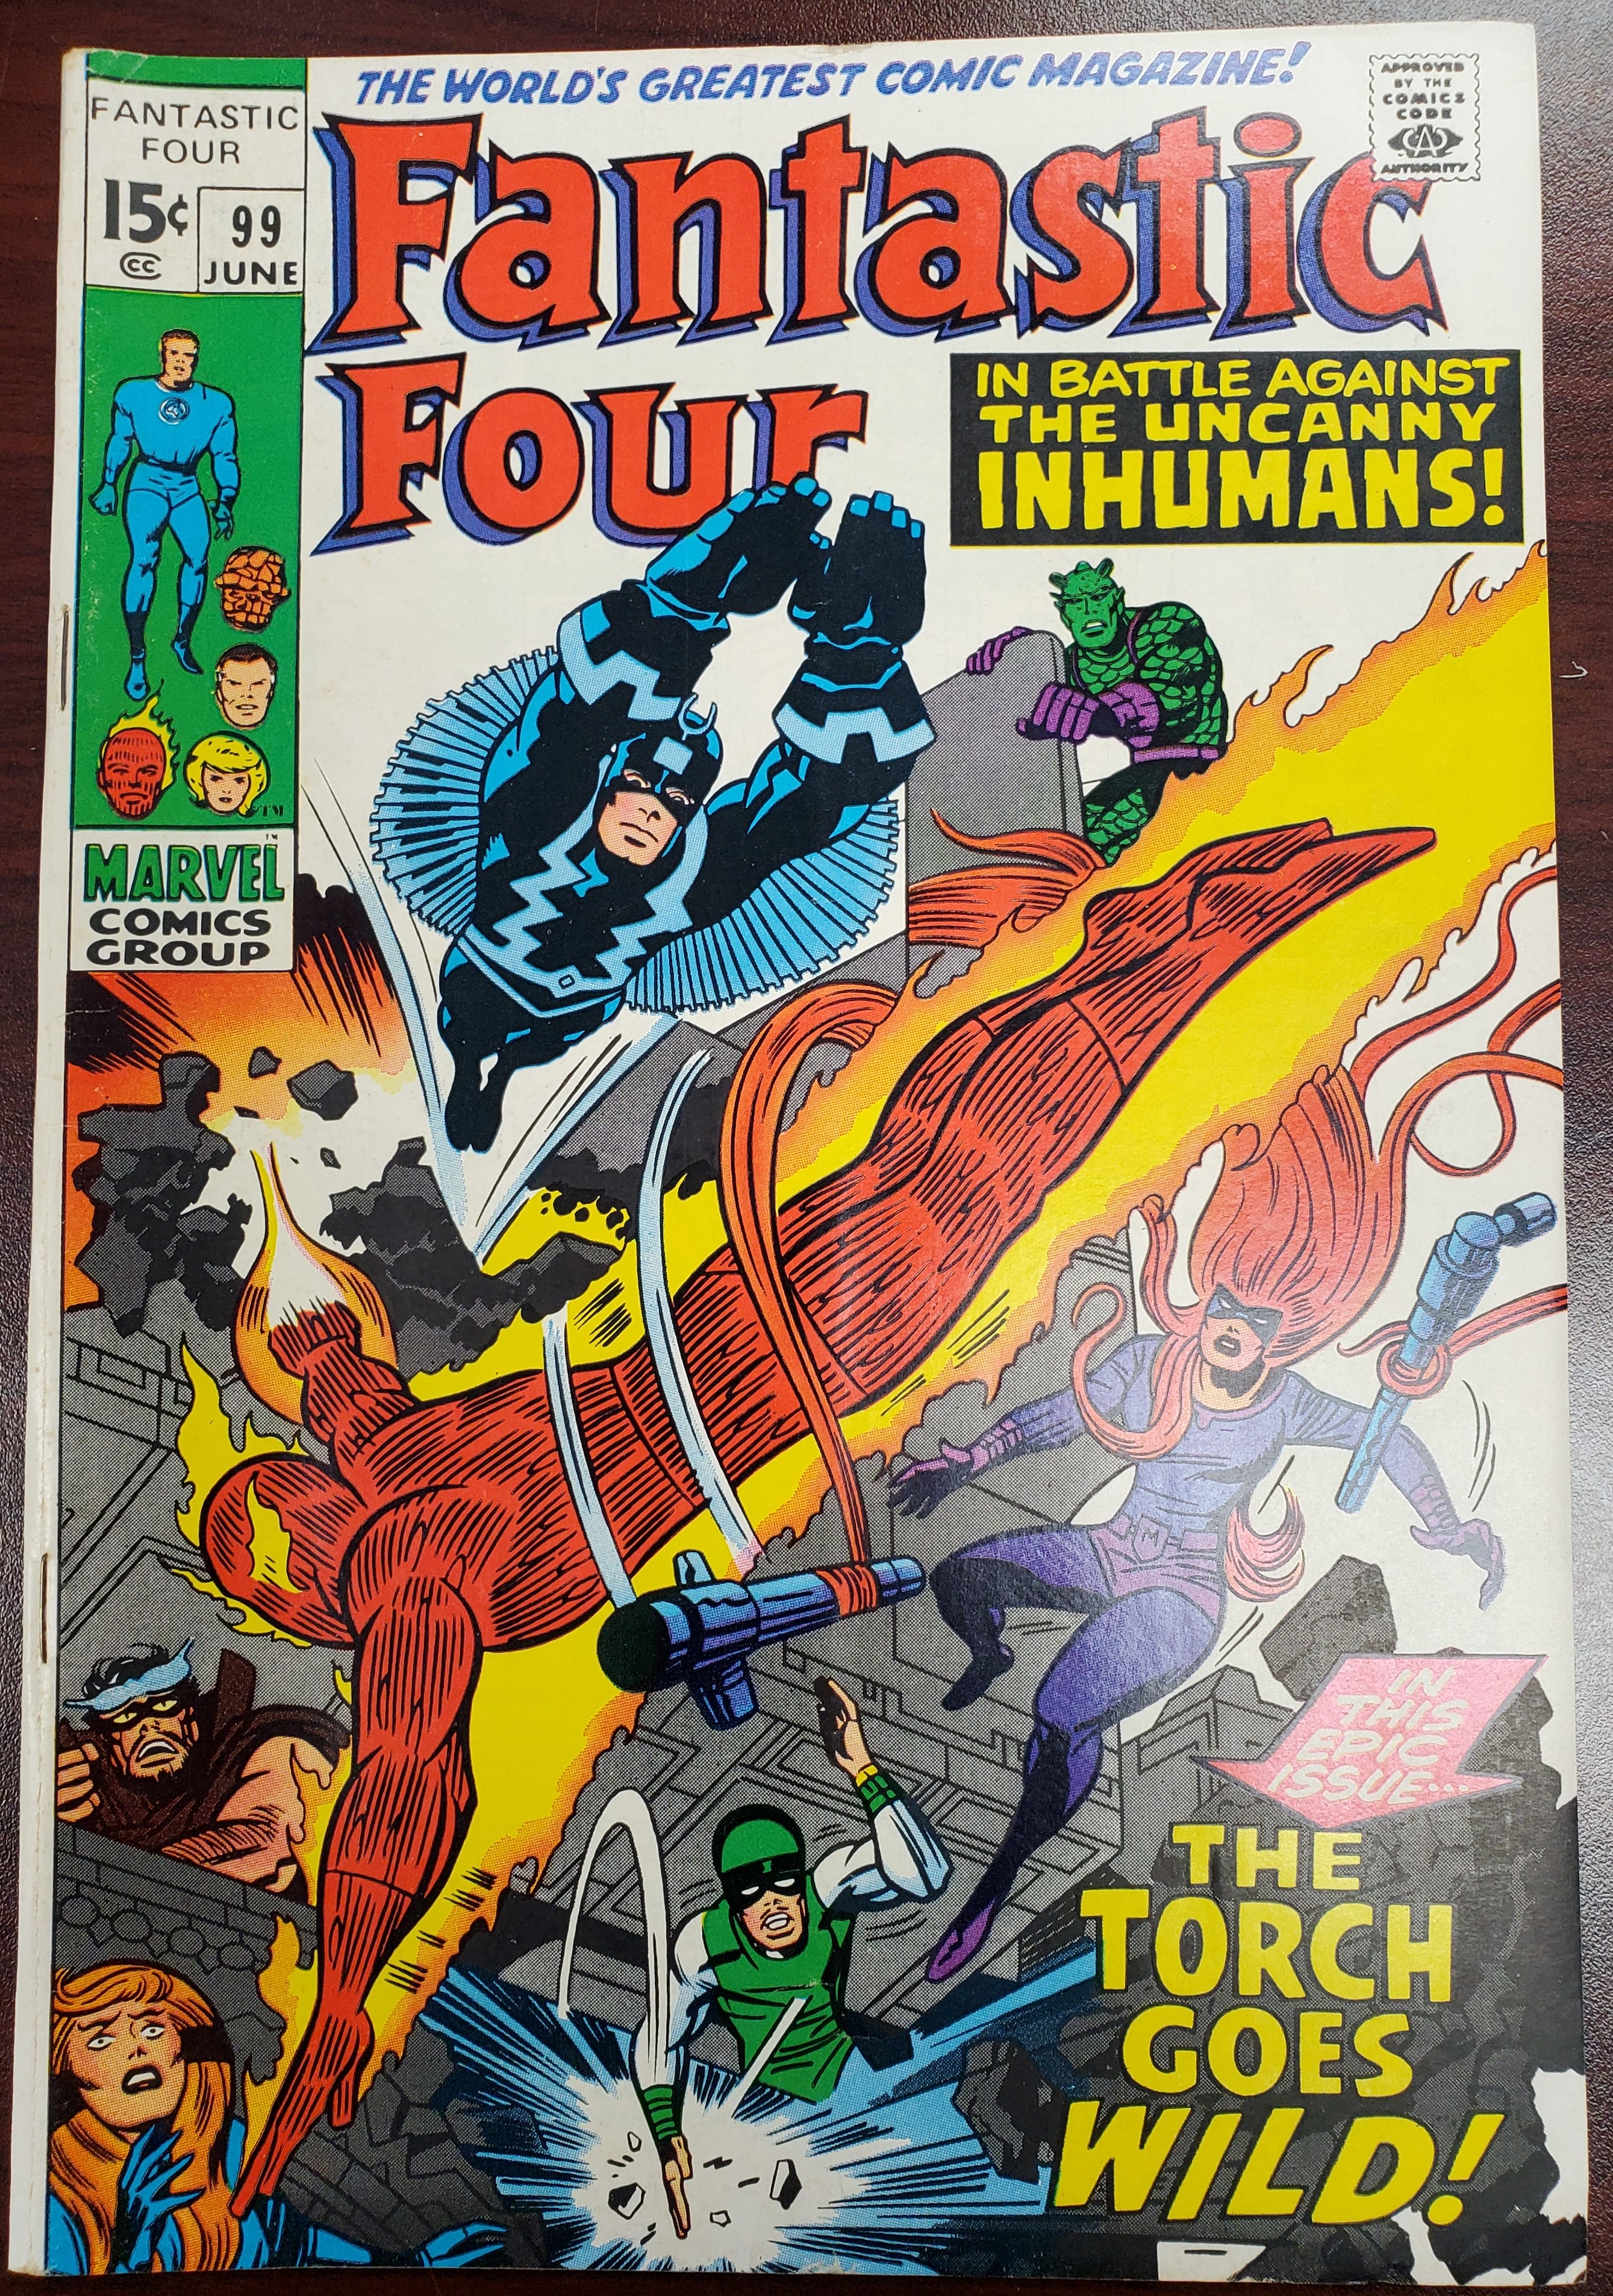 Fantastic Four #99 (1961)